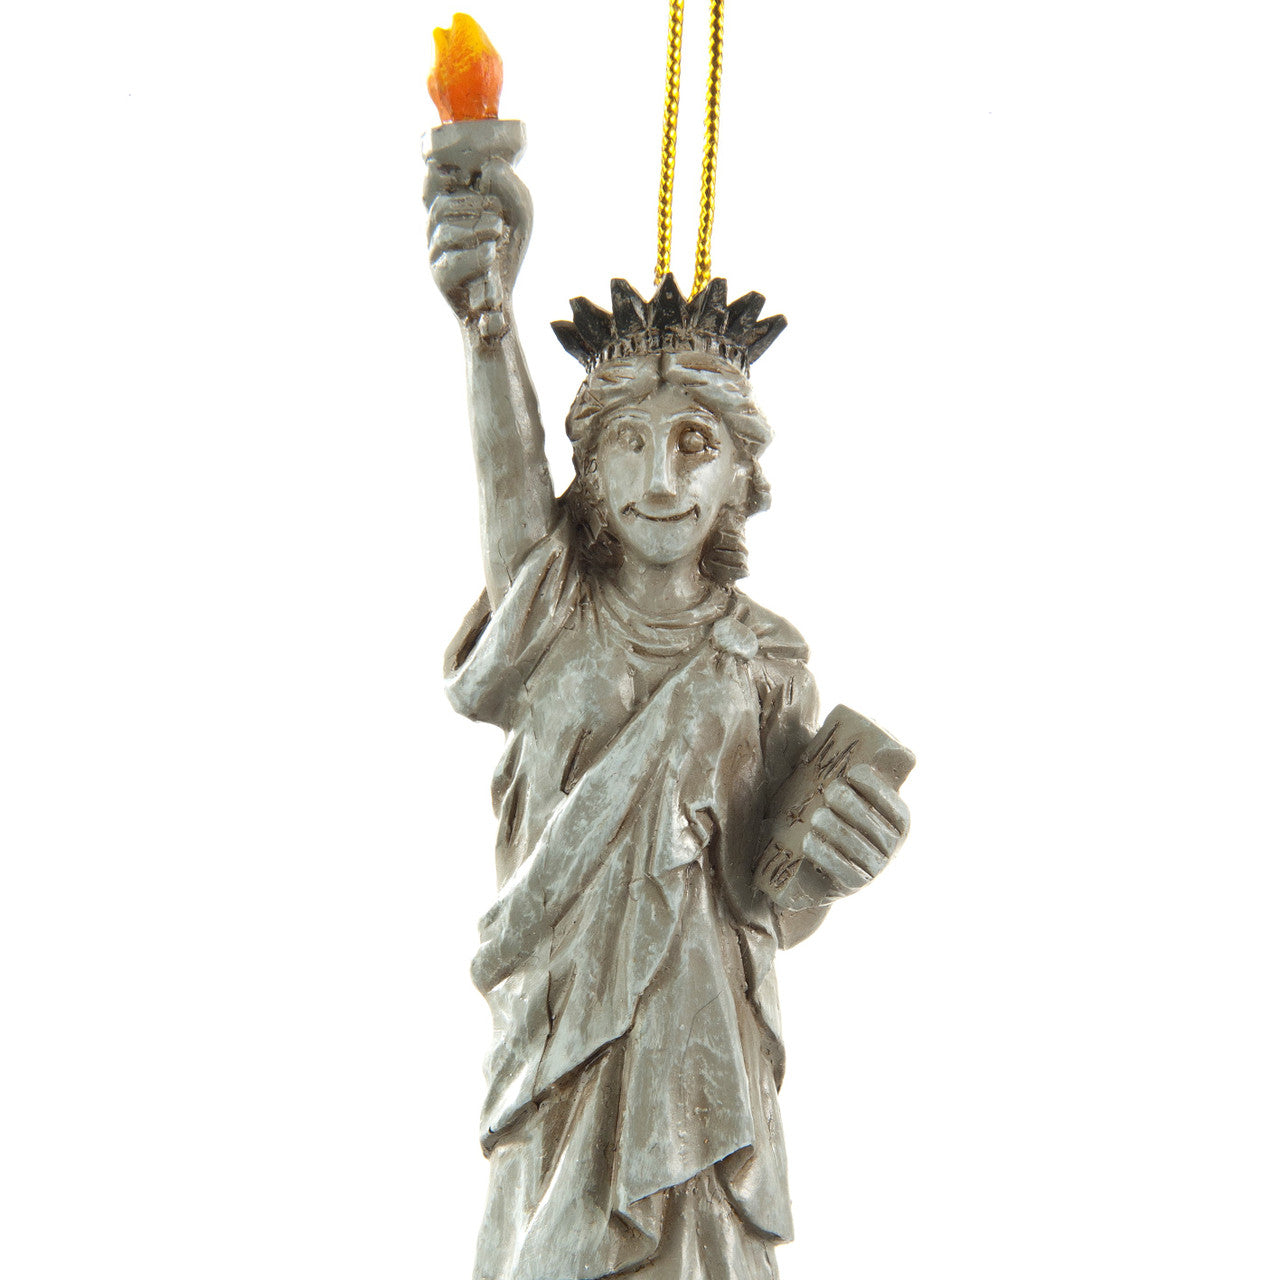 Bac 721 Statue of Liberty Ornament Set of 3